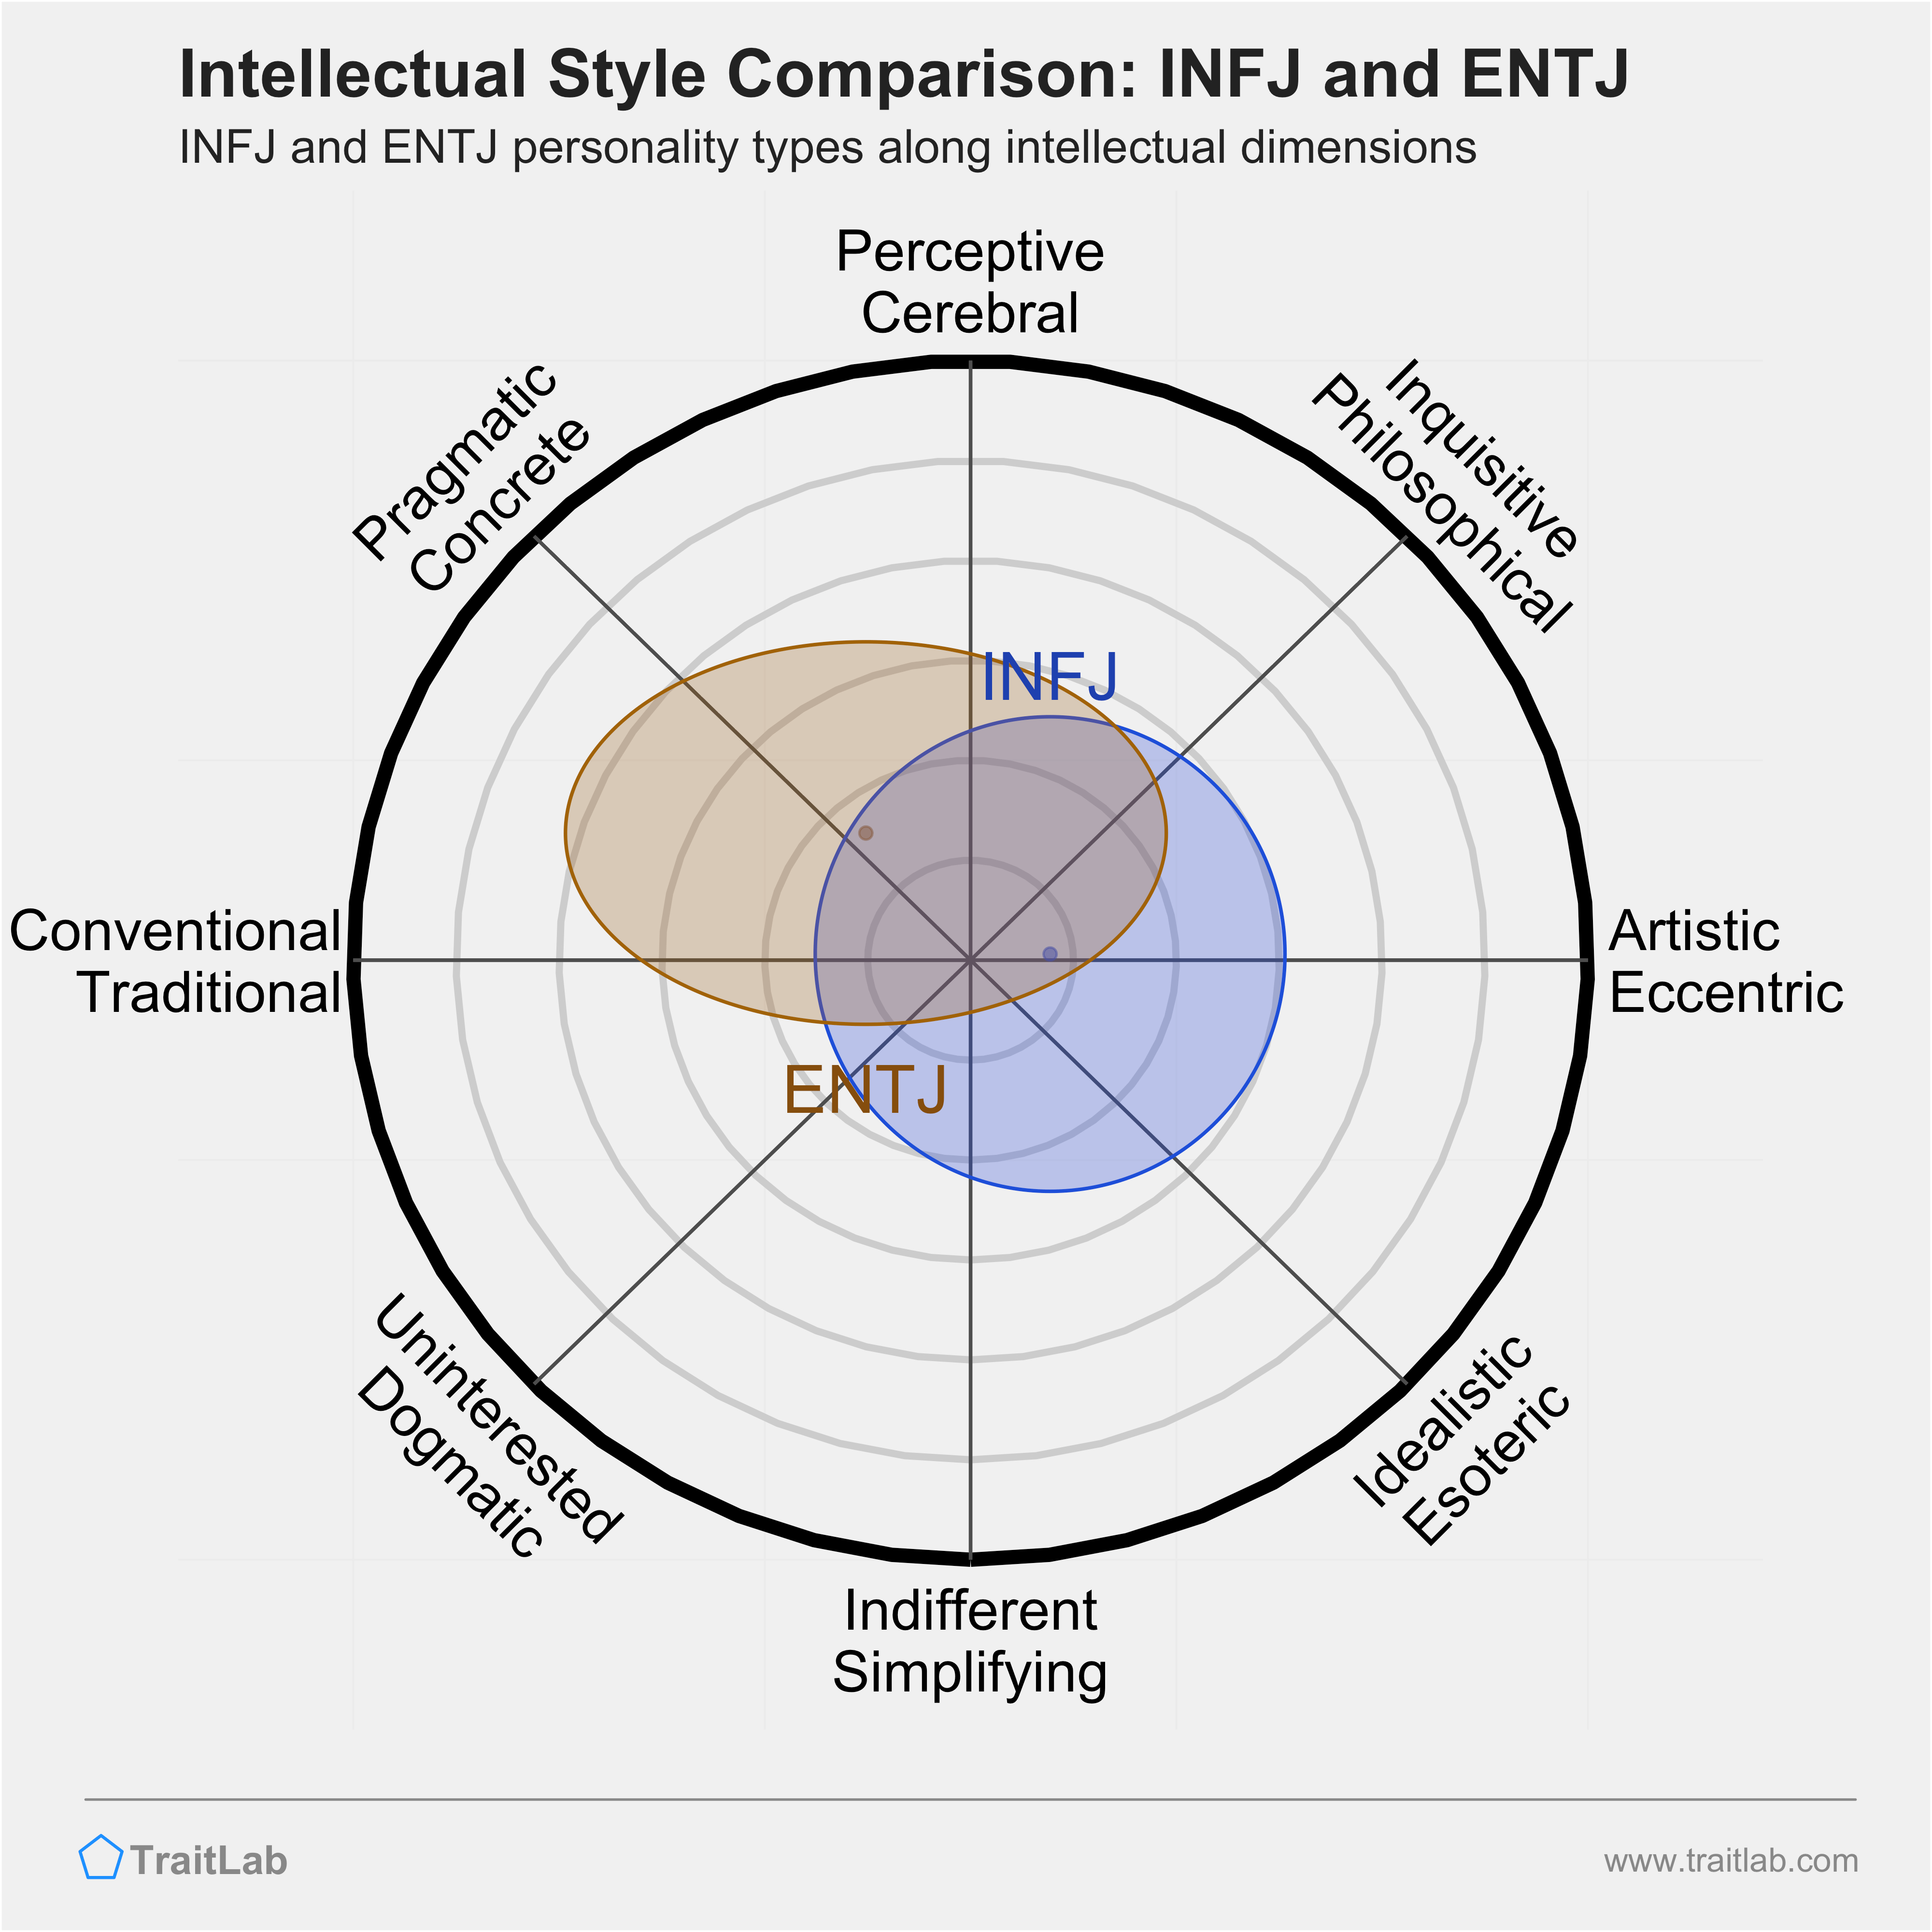 INFJ and ENTJ comparison across intellectual dimensions